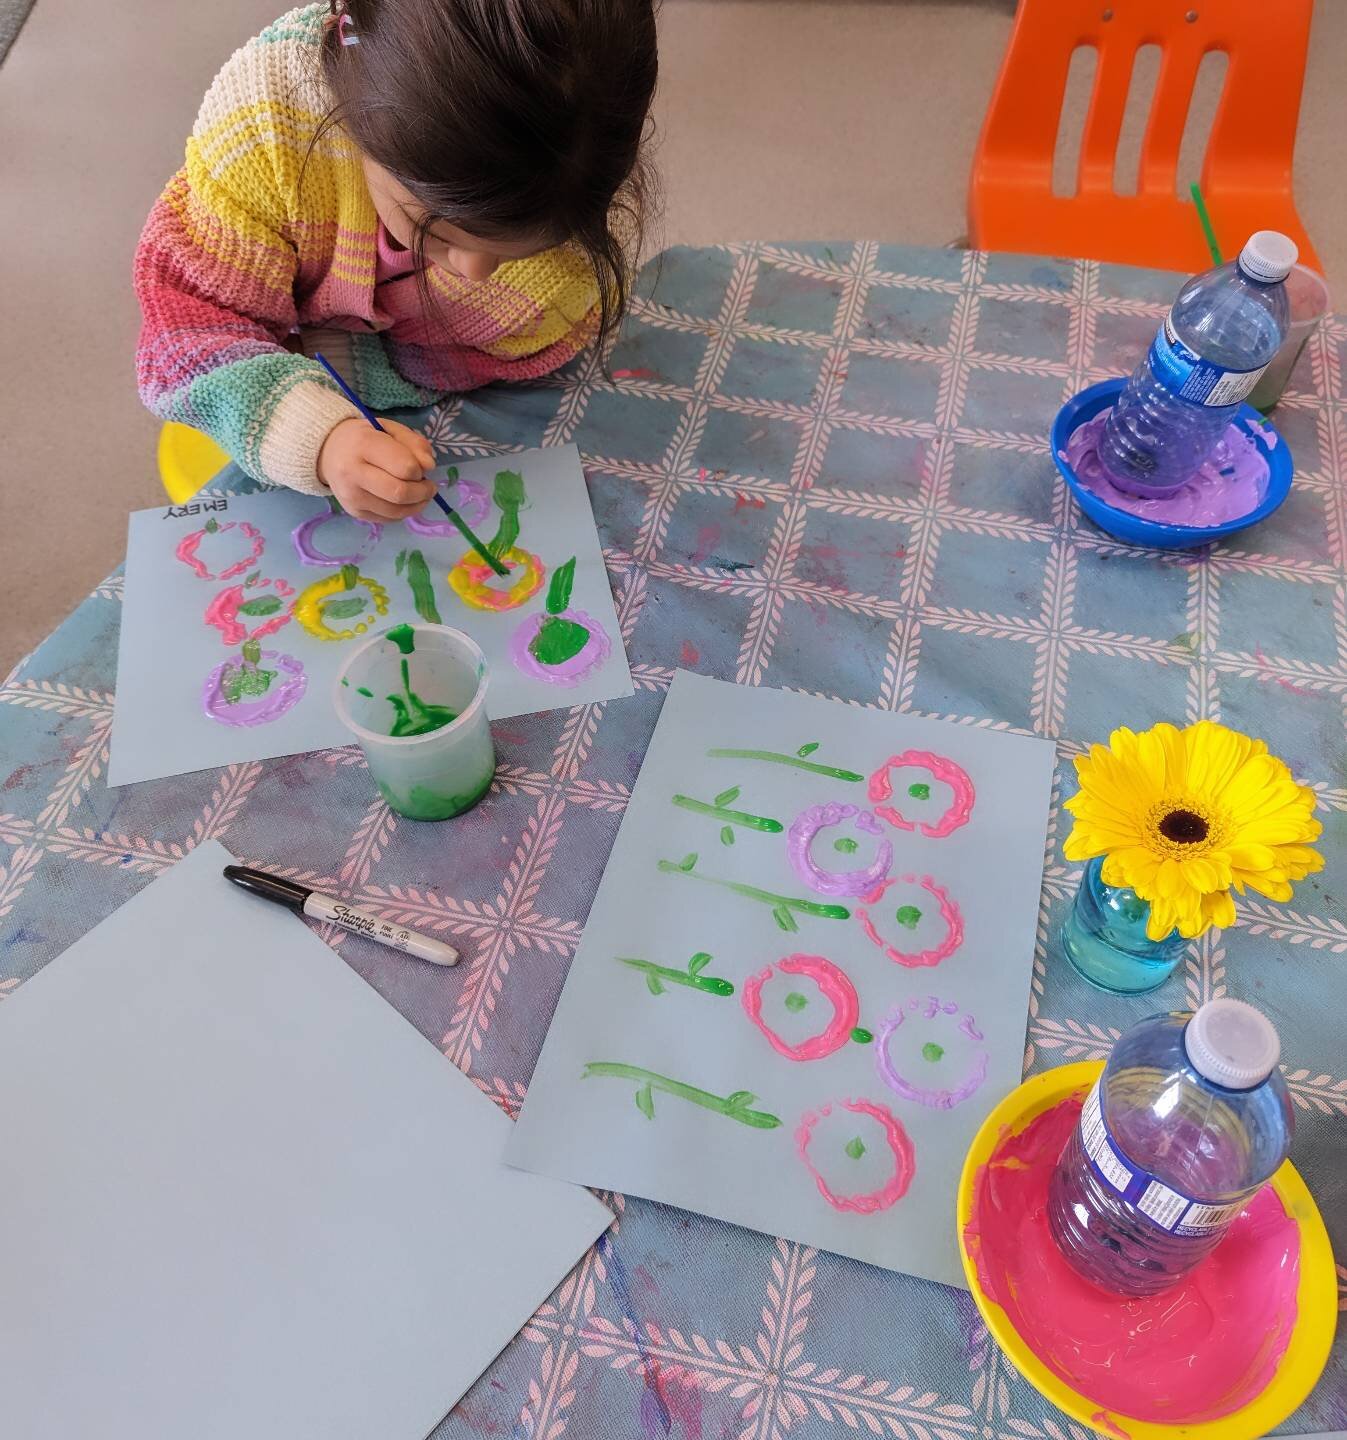 Bottle printing spring flowers 🌼 🌸
#preschoolart